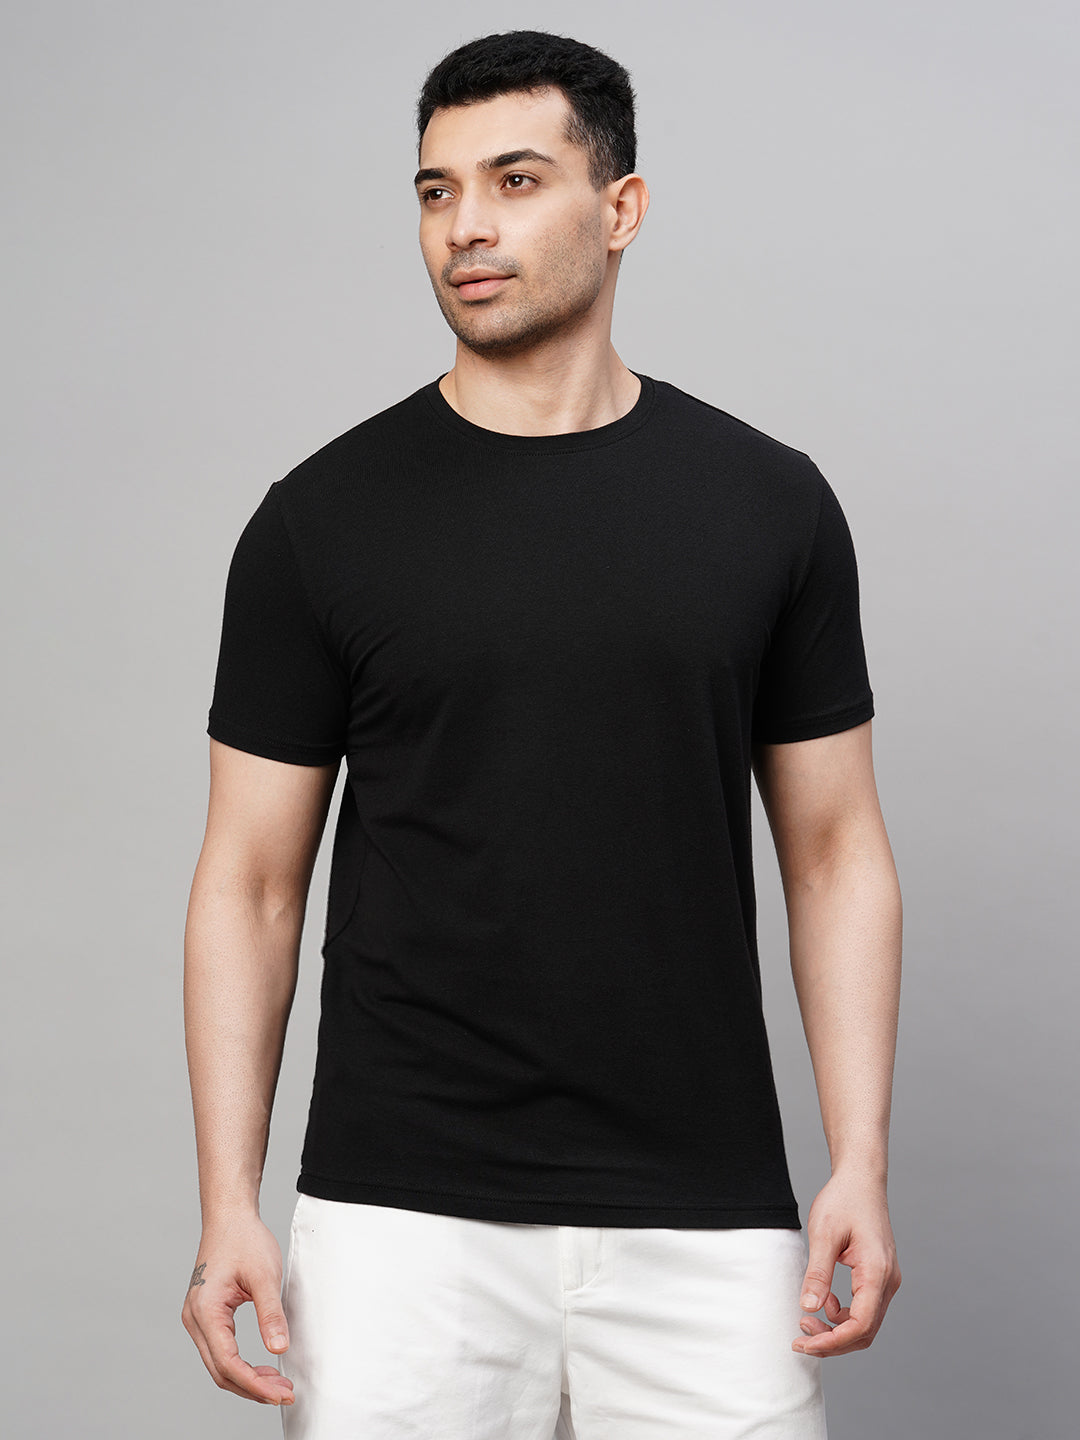 Men's Cotton Bamboo Elastane Black Regular Fit Tshirt